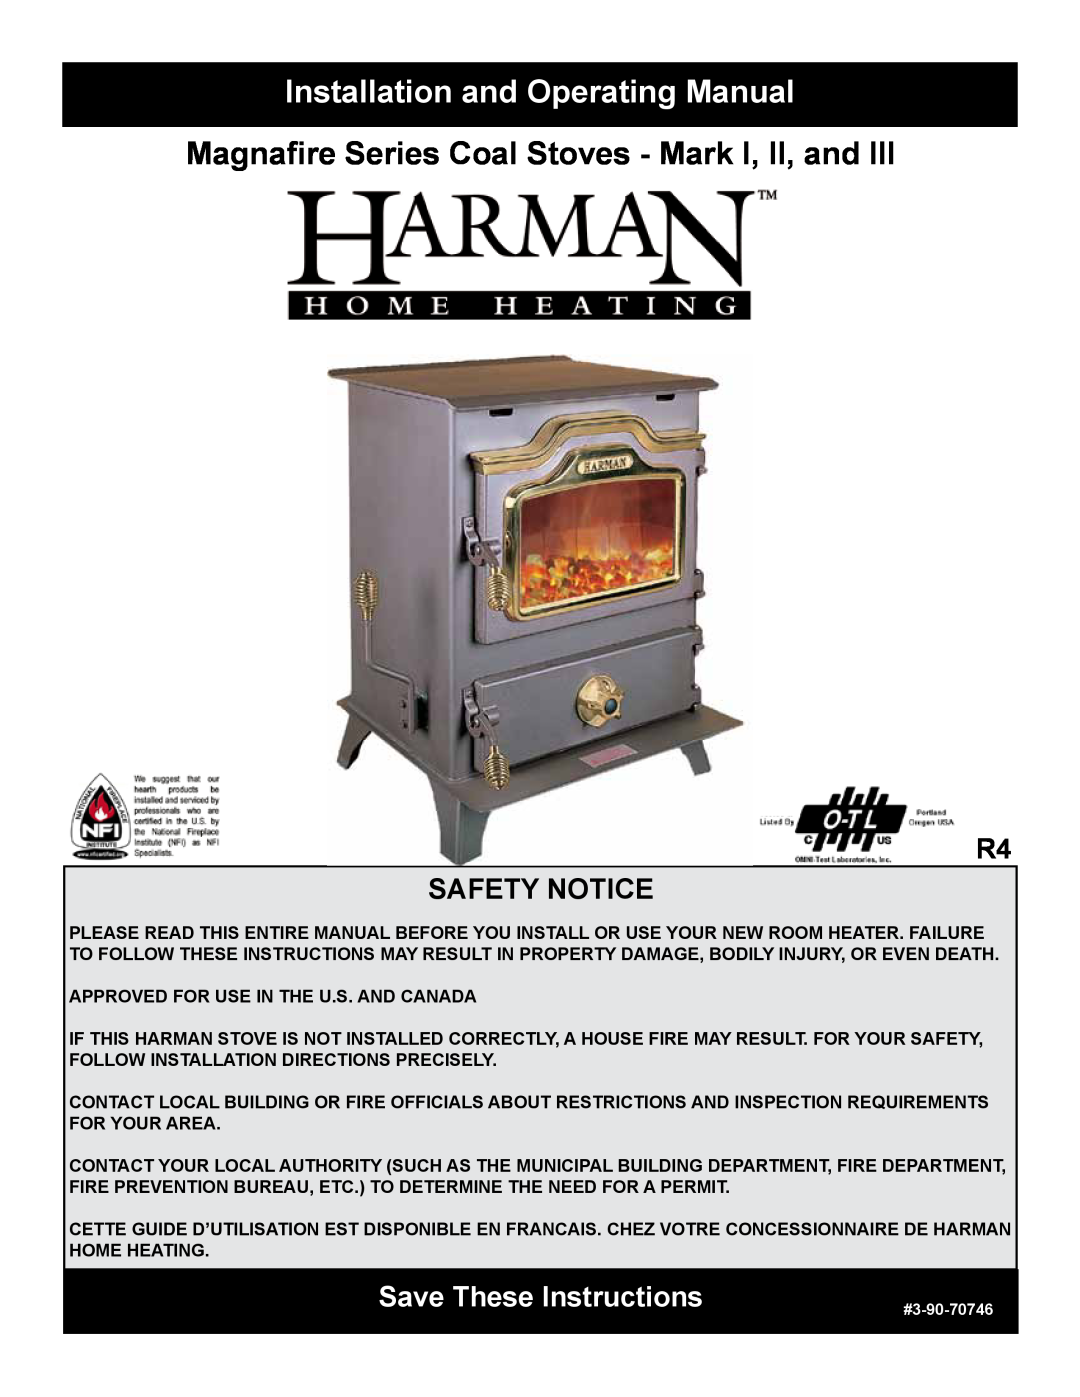 Harman Stove Company MARK I manual Installation and Operating Manual, Magnafire Series Coal Stoves - Mark I, II, and 